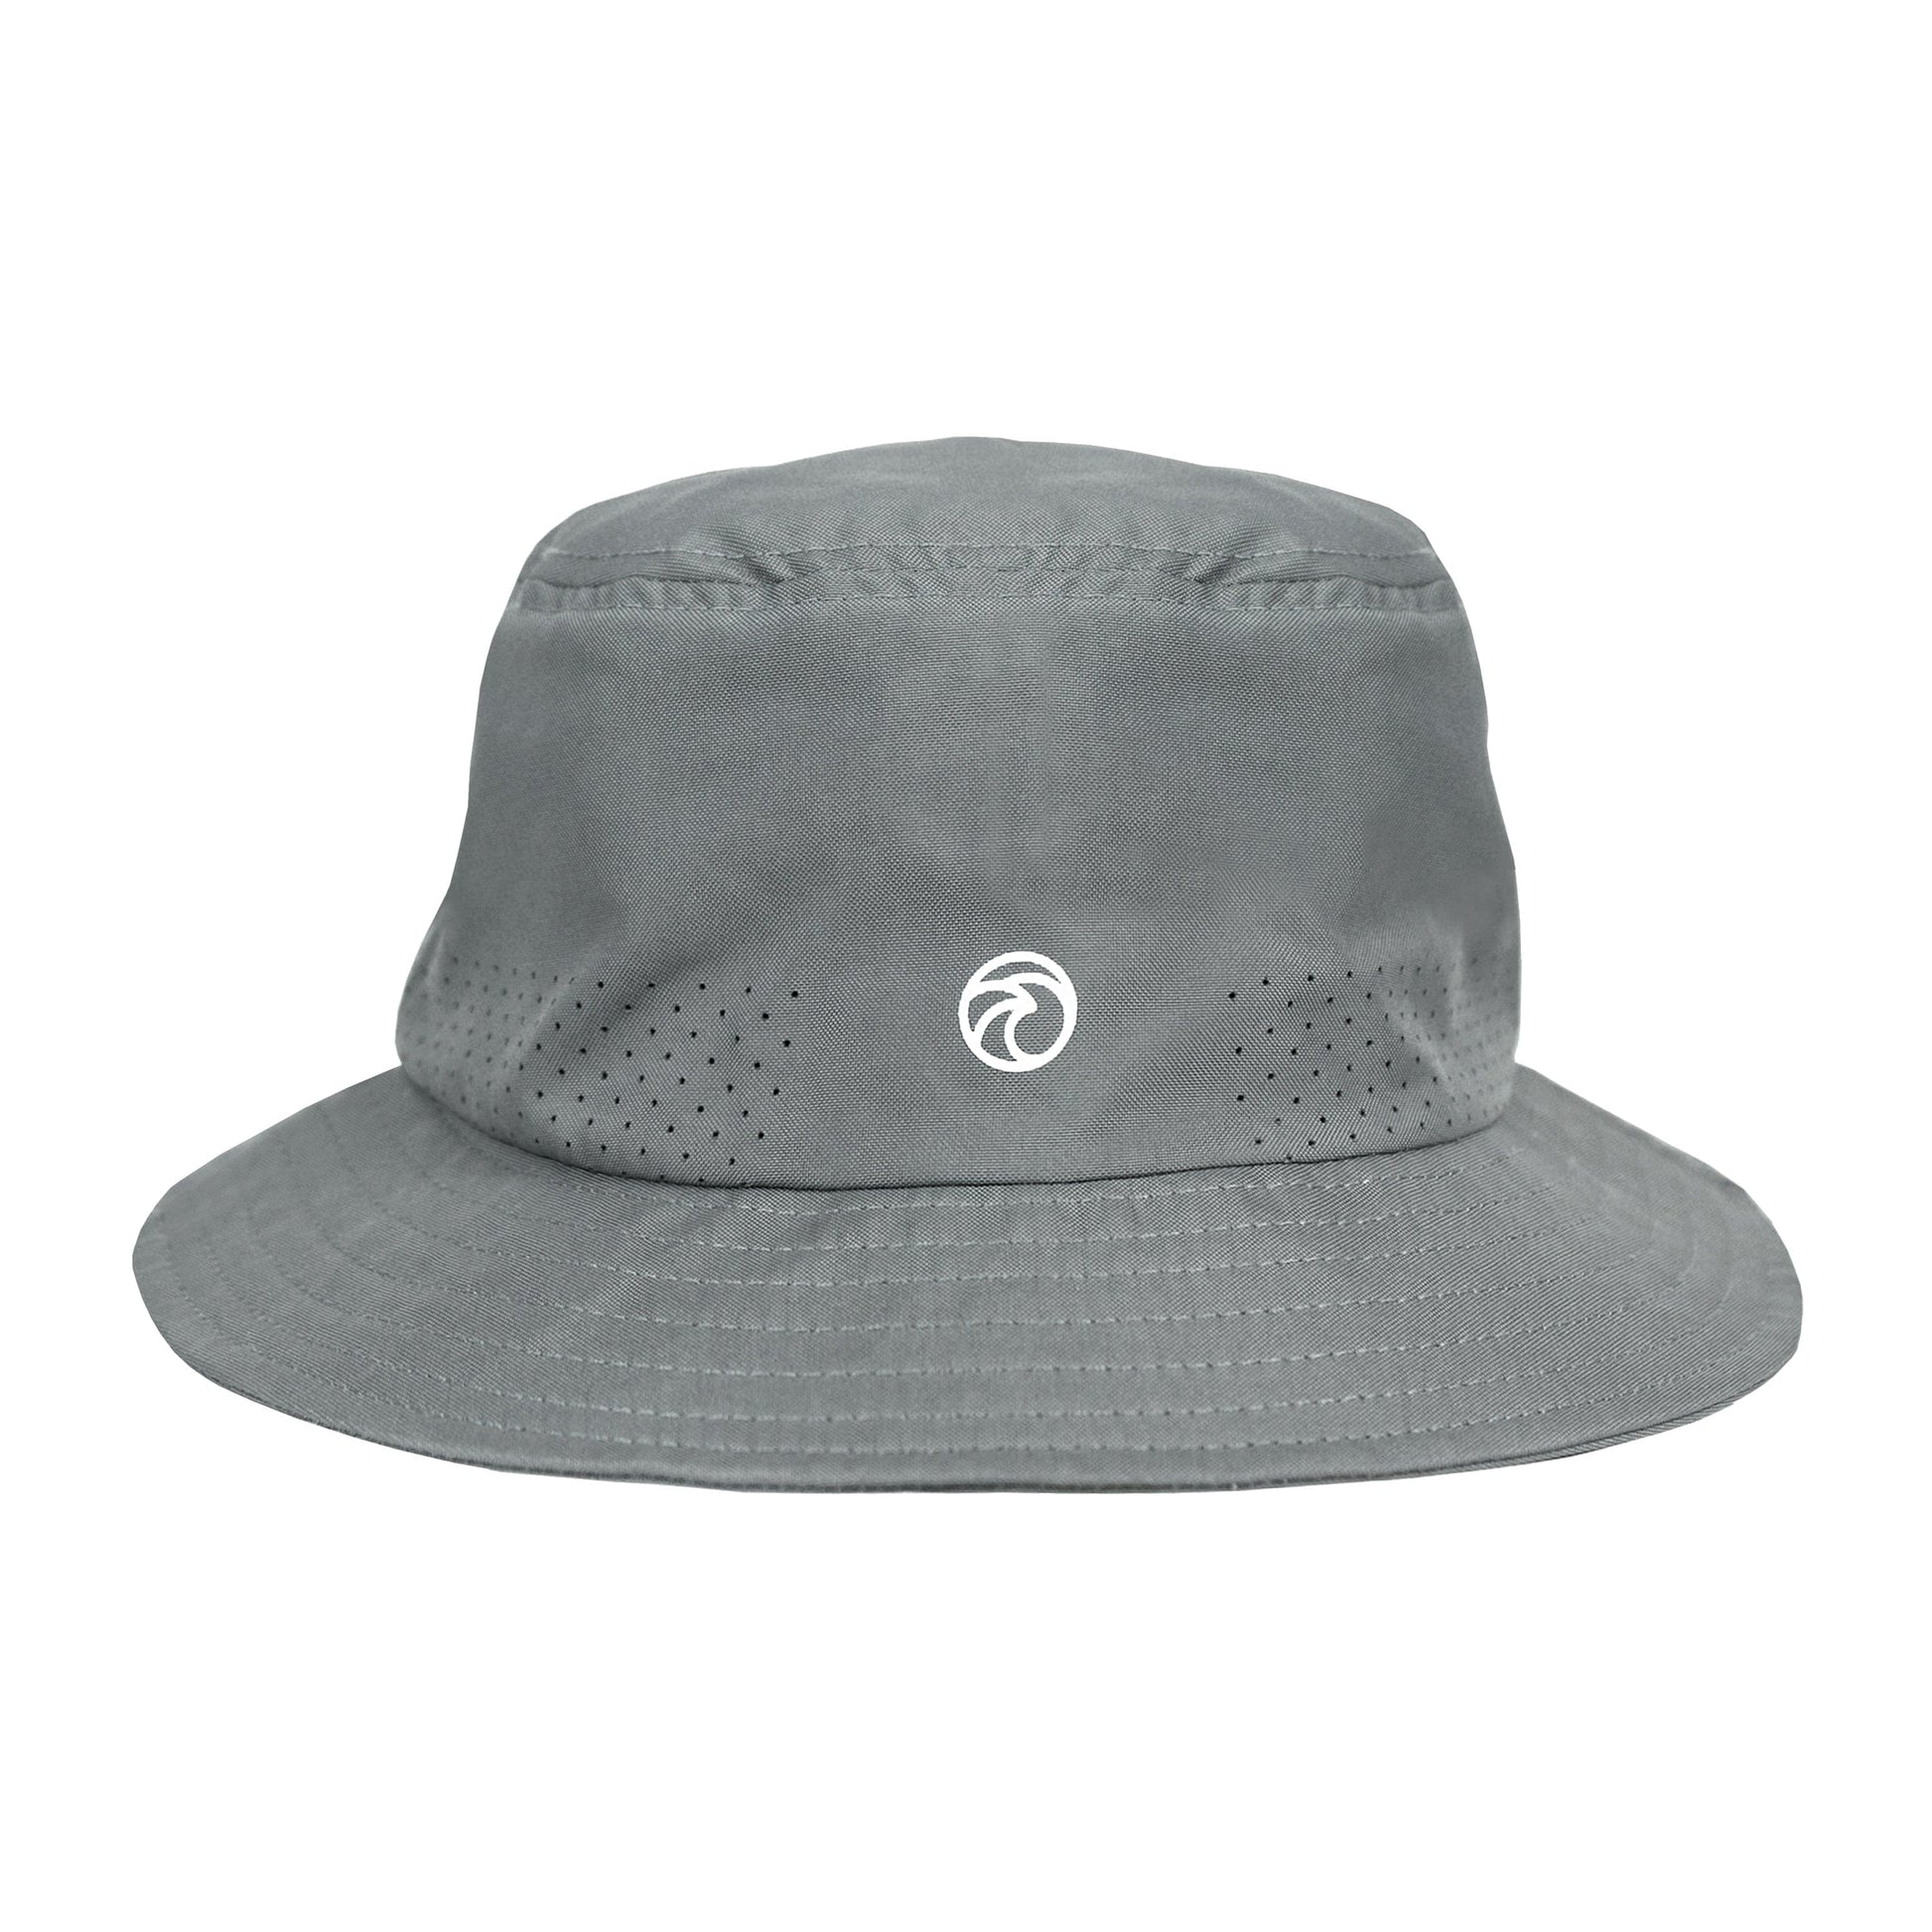 Vapor Apparel Sun Protection Adult Boonie Adventure Hat